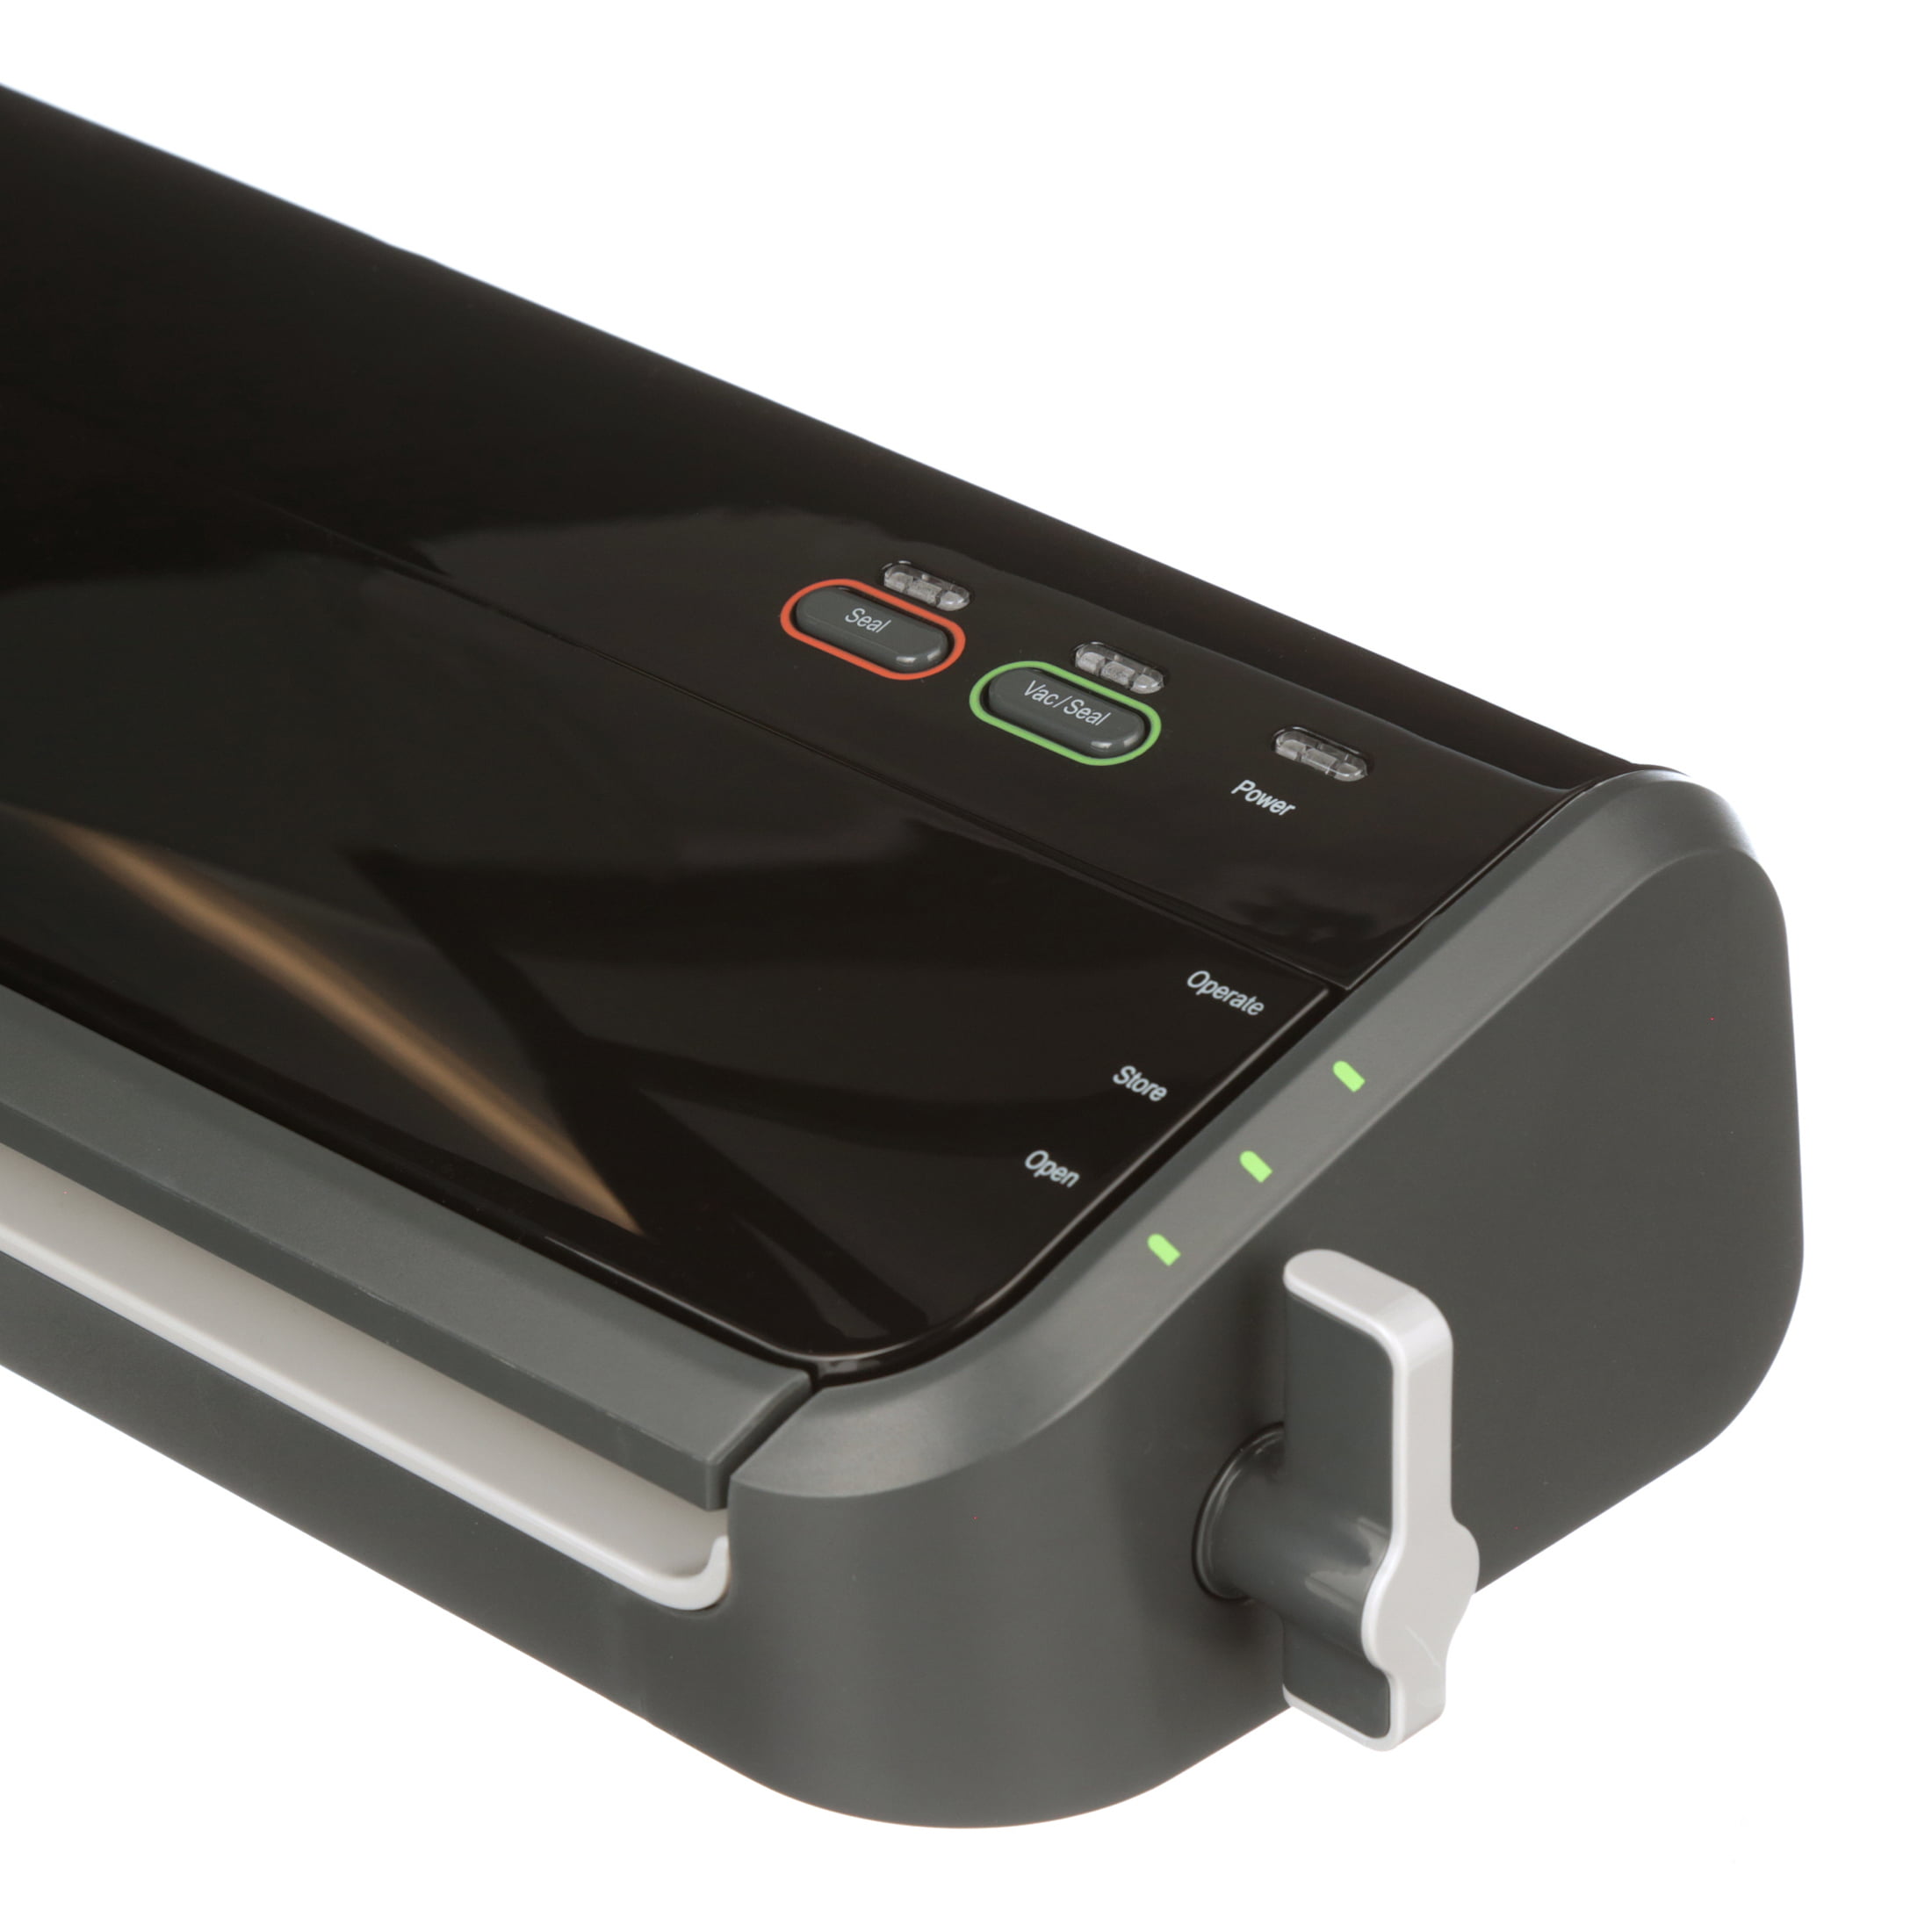 Digital Food Vacuum Sealer System – Pyle USA